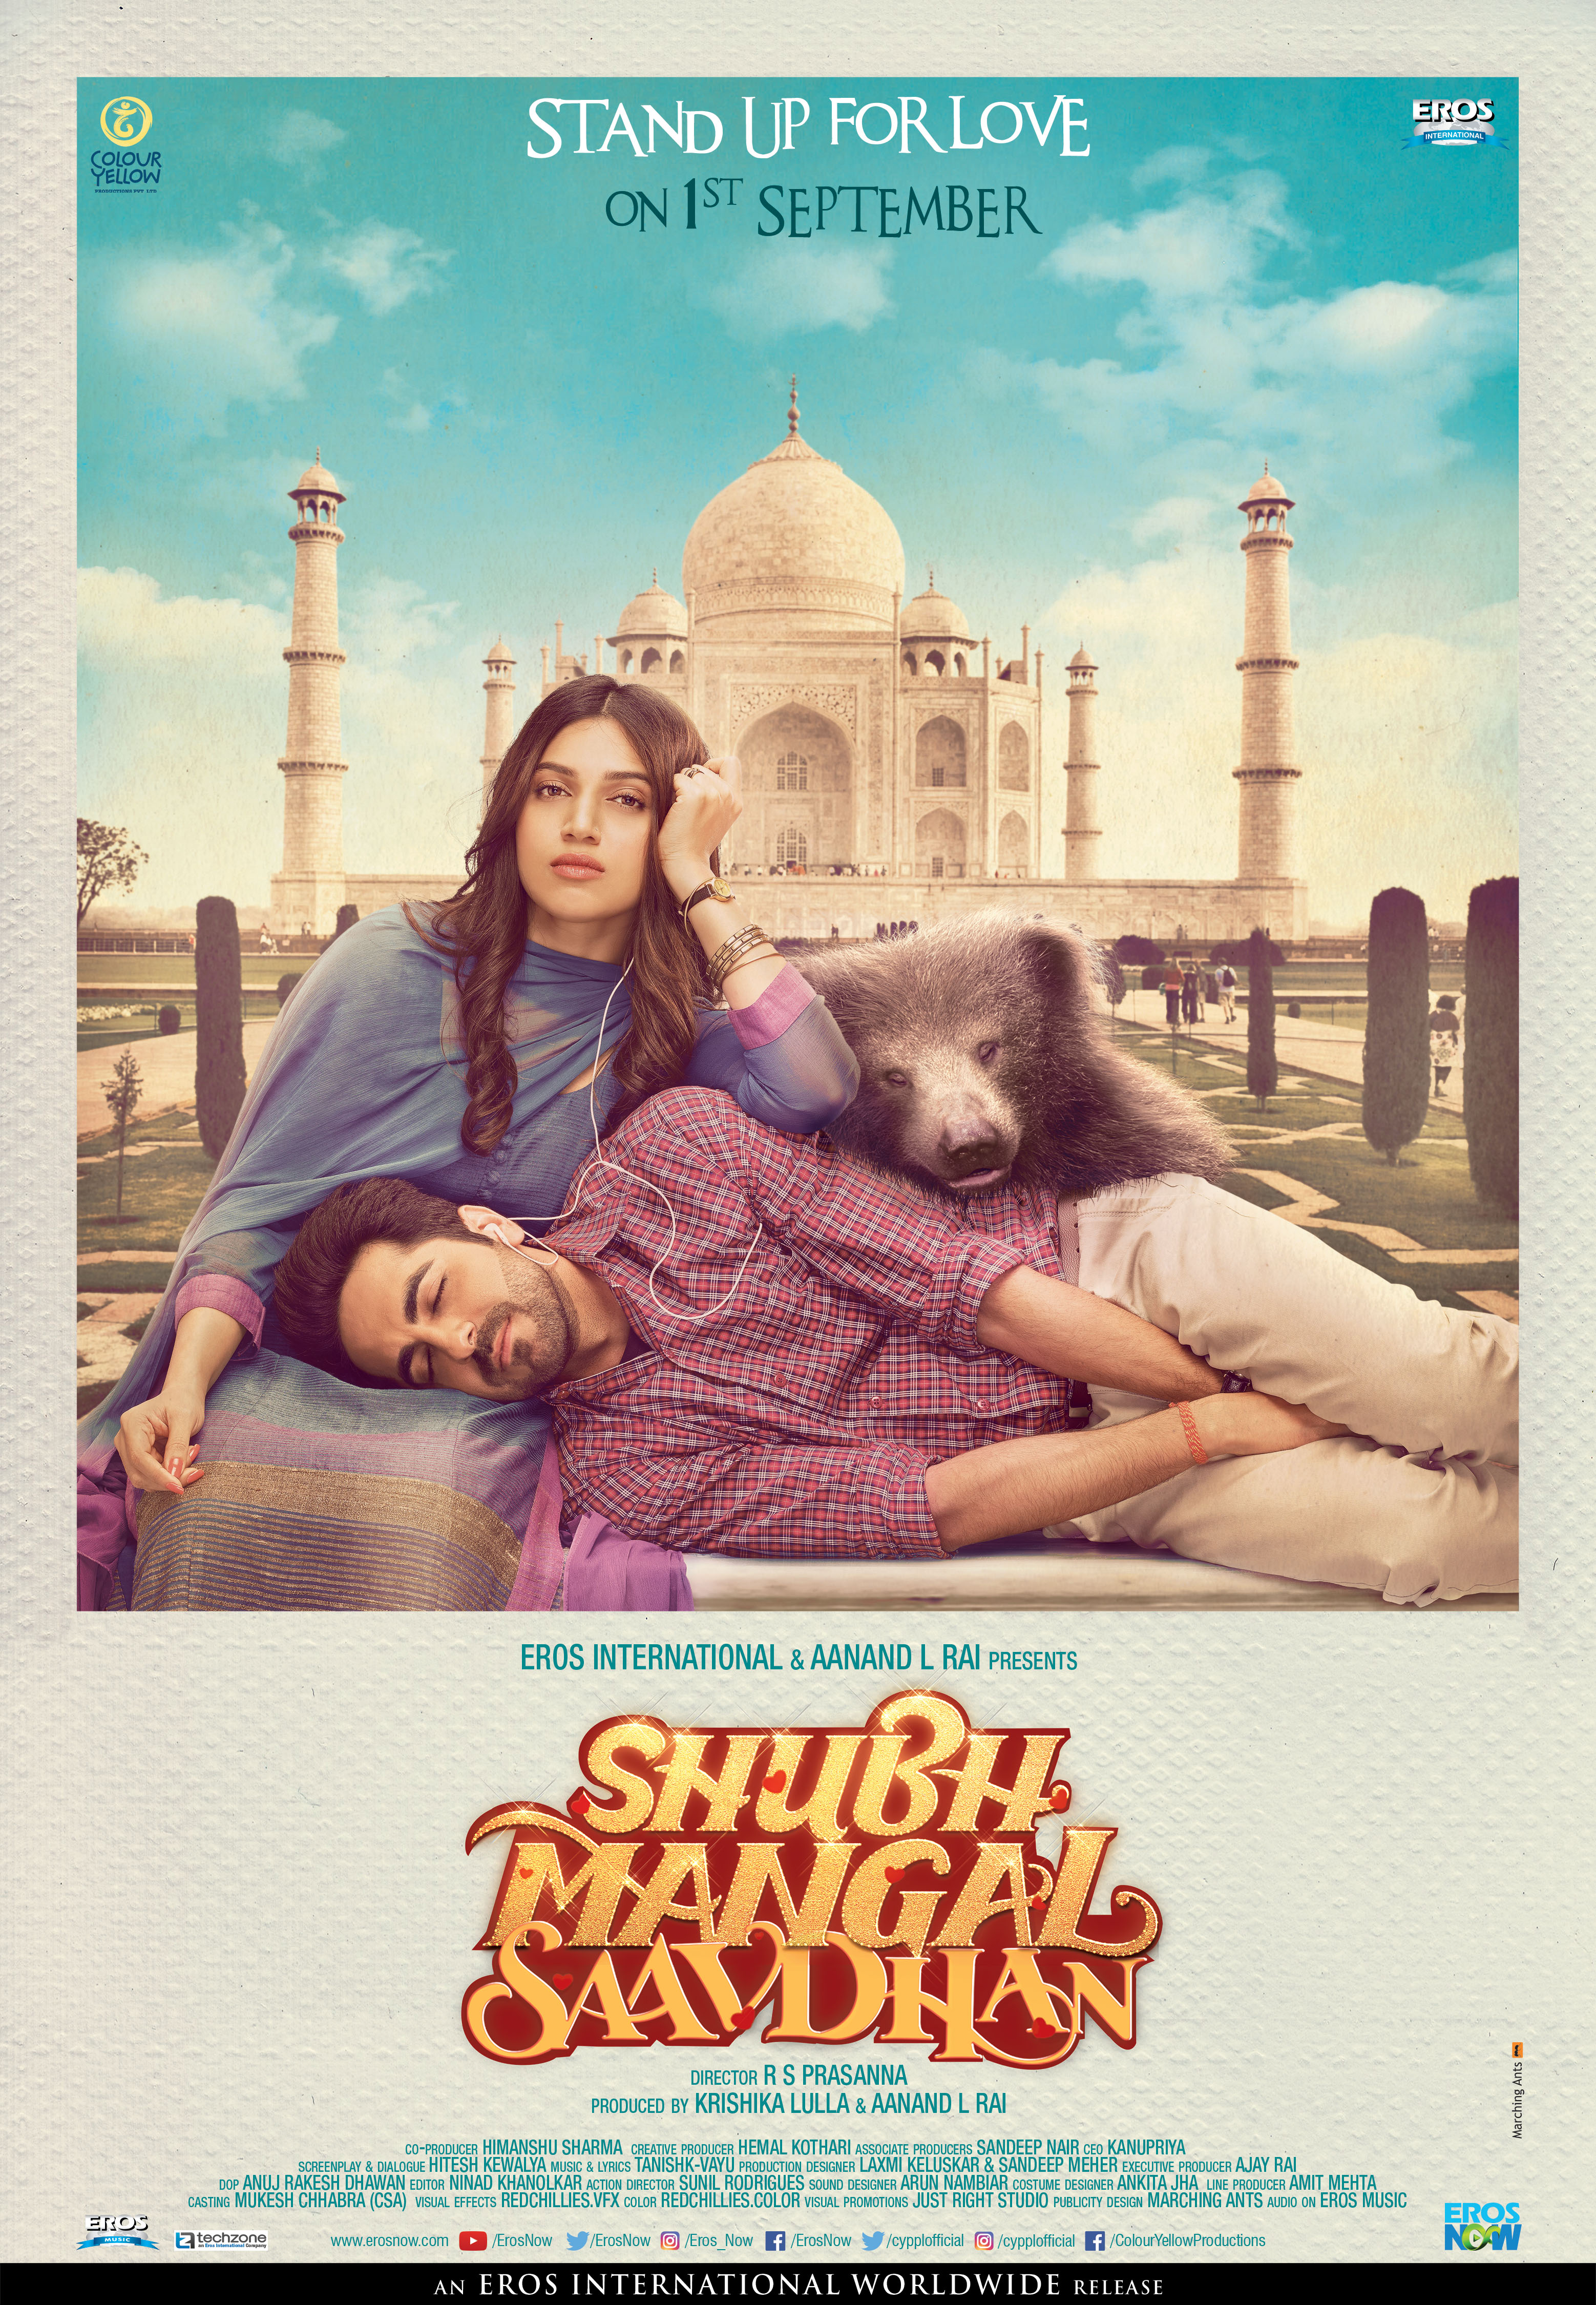 Shubh Mangal Savdhan 2017 Full Hindi Movie 1080p 720p 480p HDRip Free Download